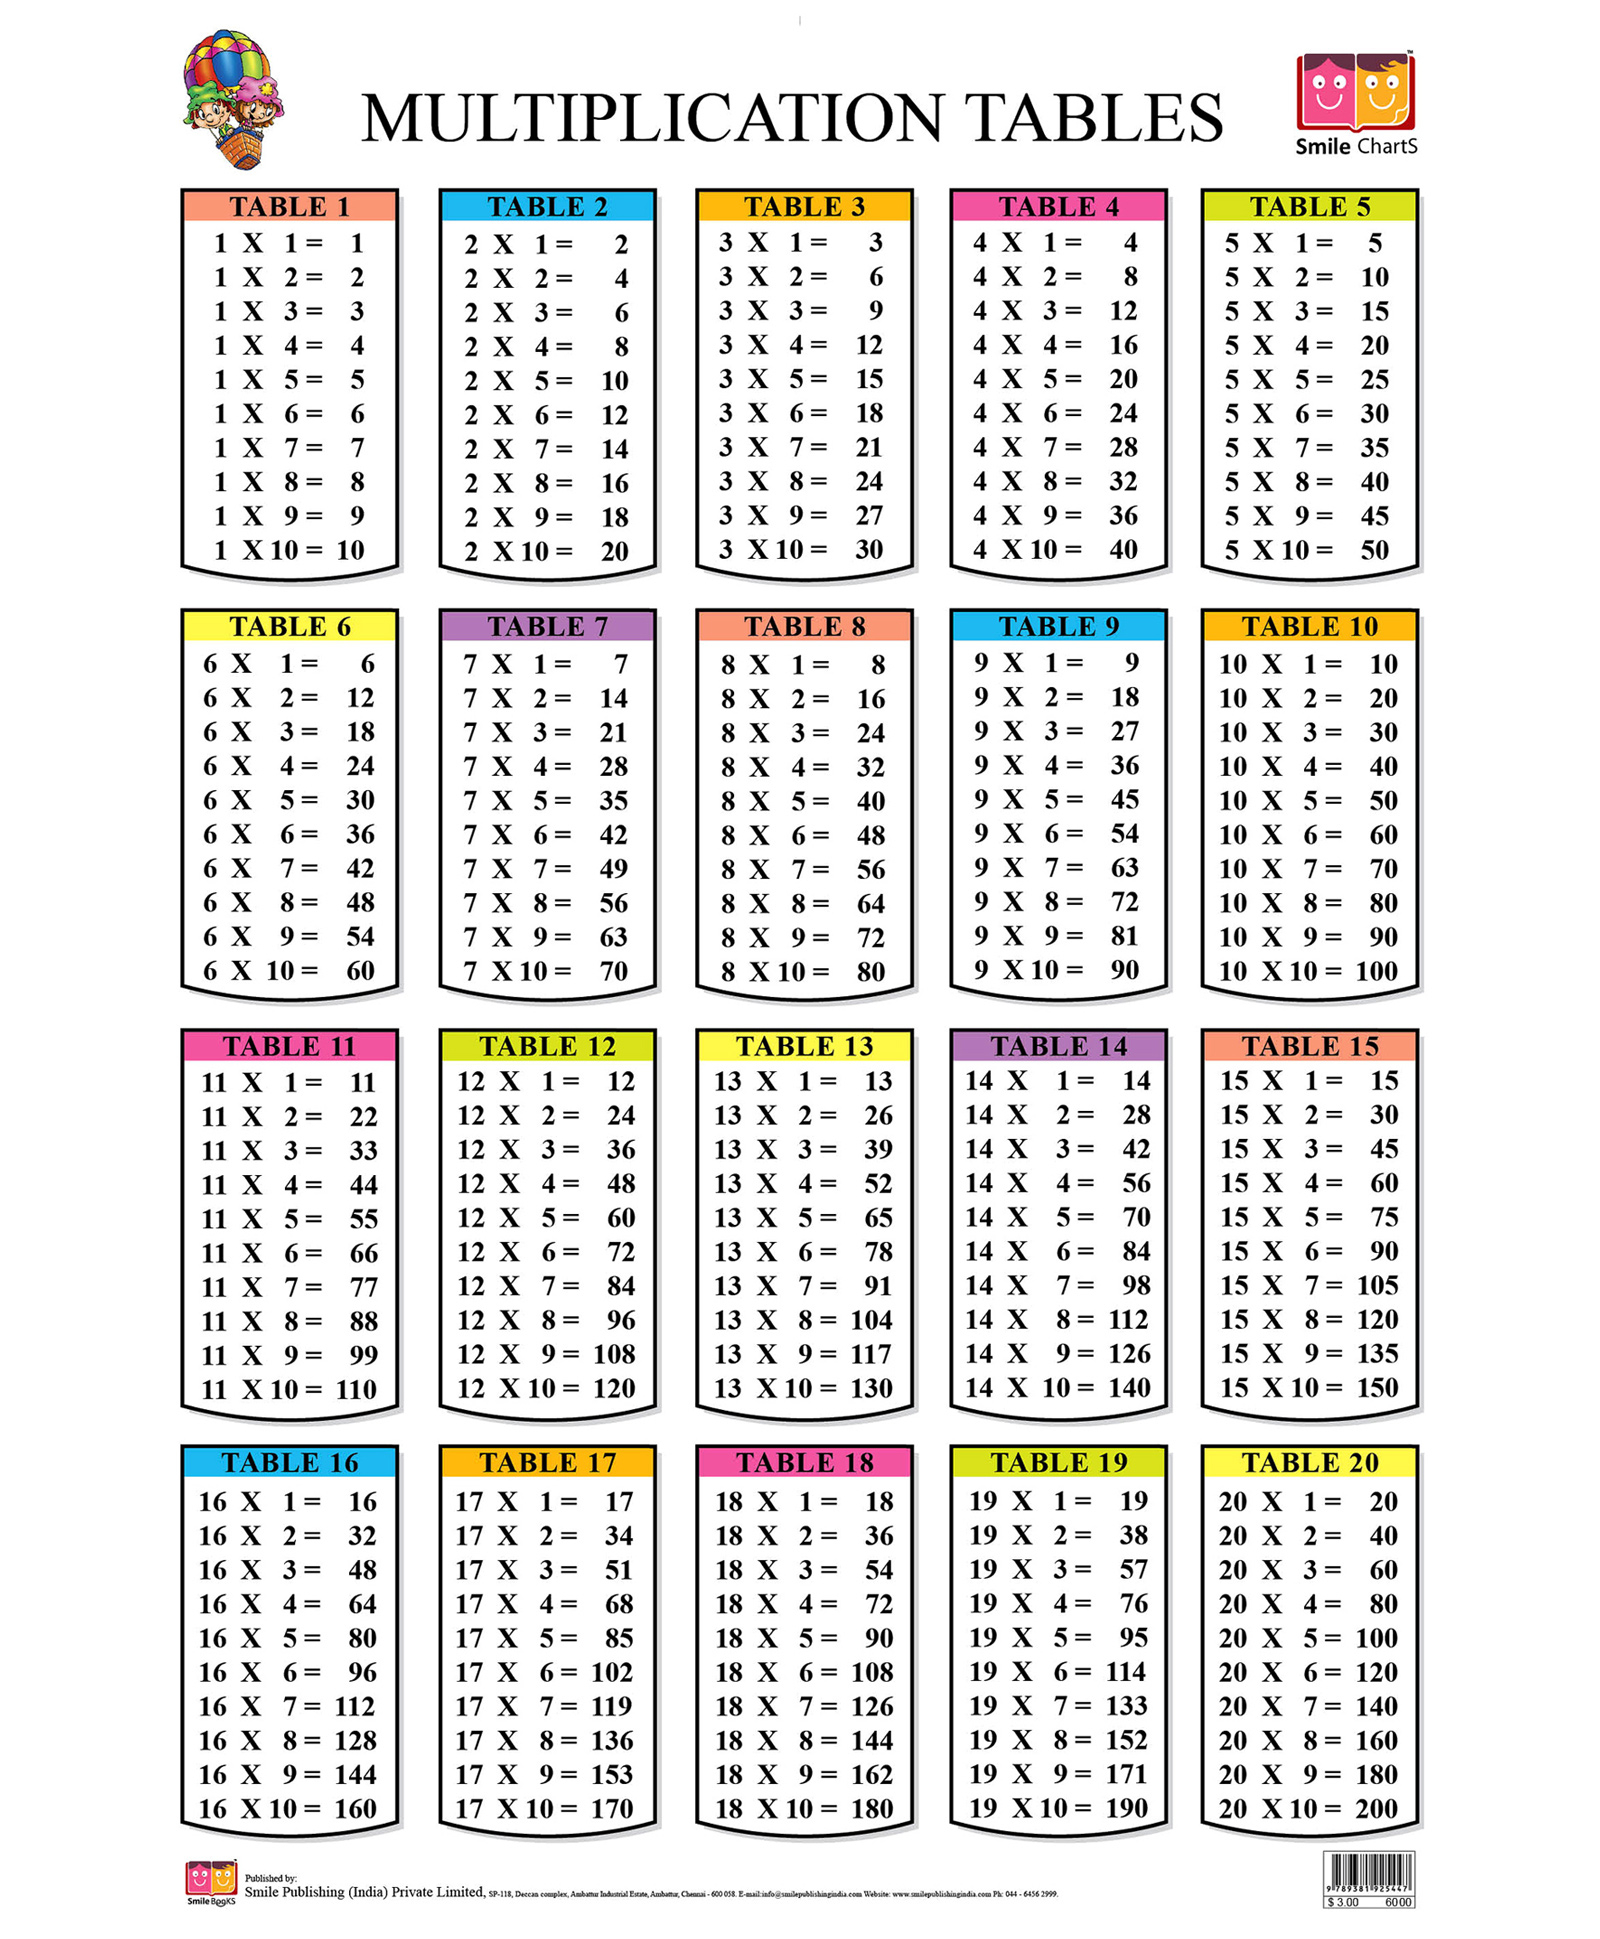 Printable Multiplication Table 20×20 | PrintableMultiplication.com